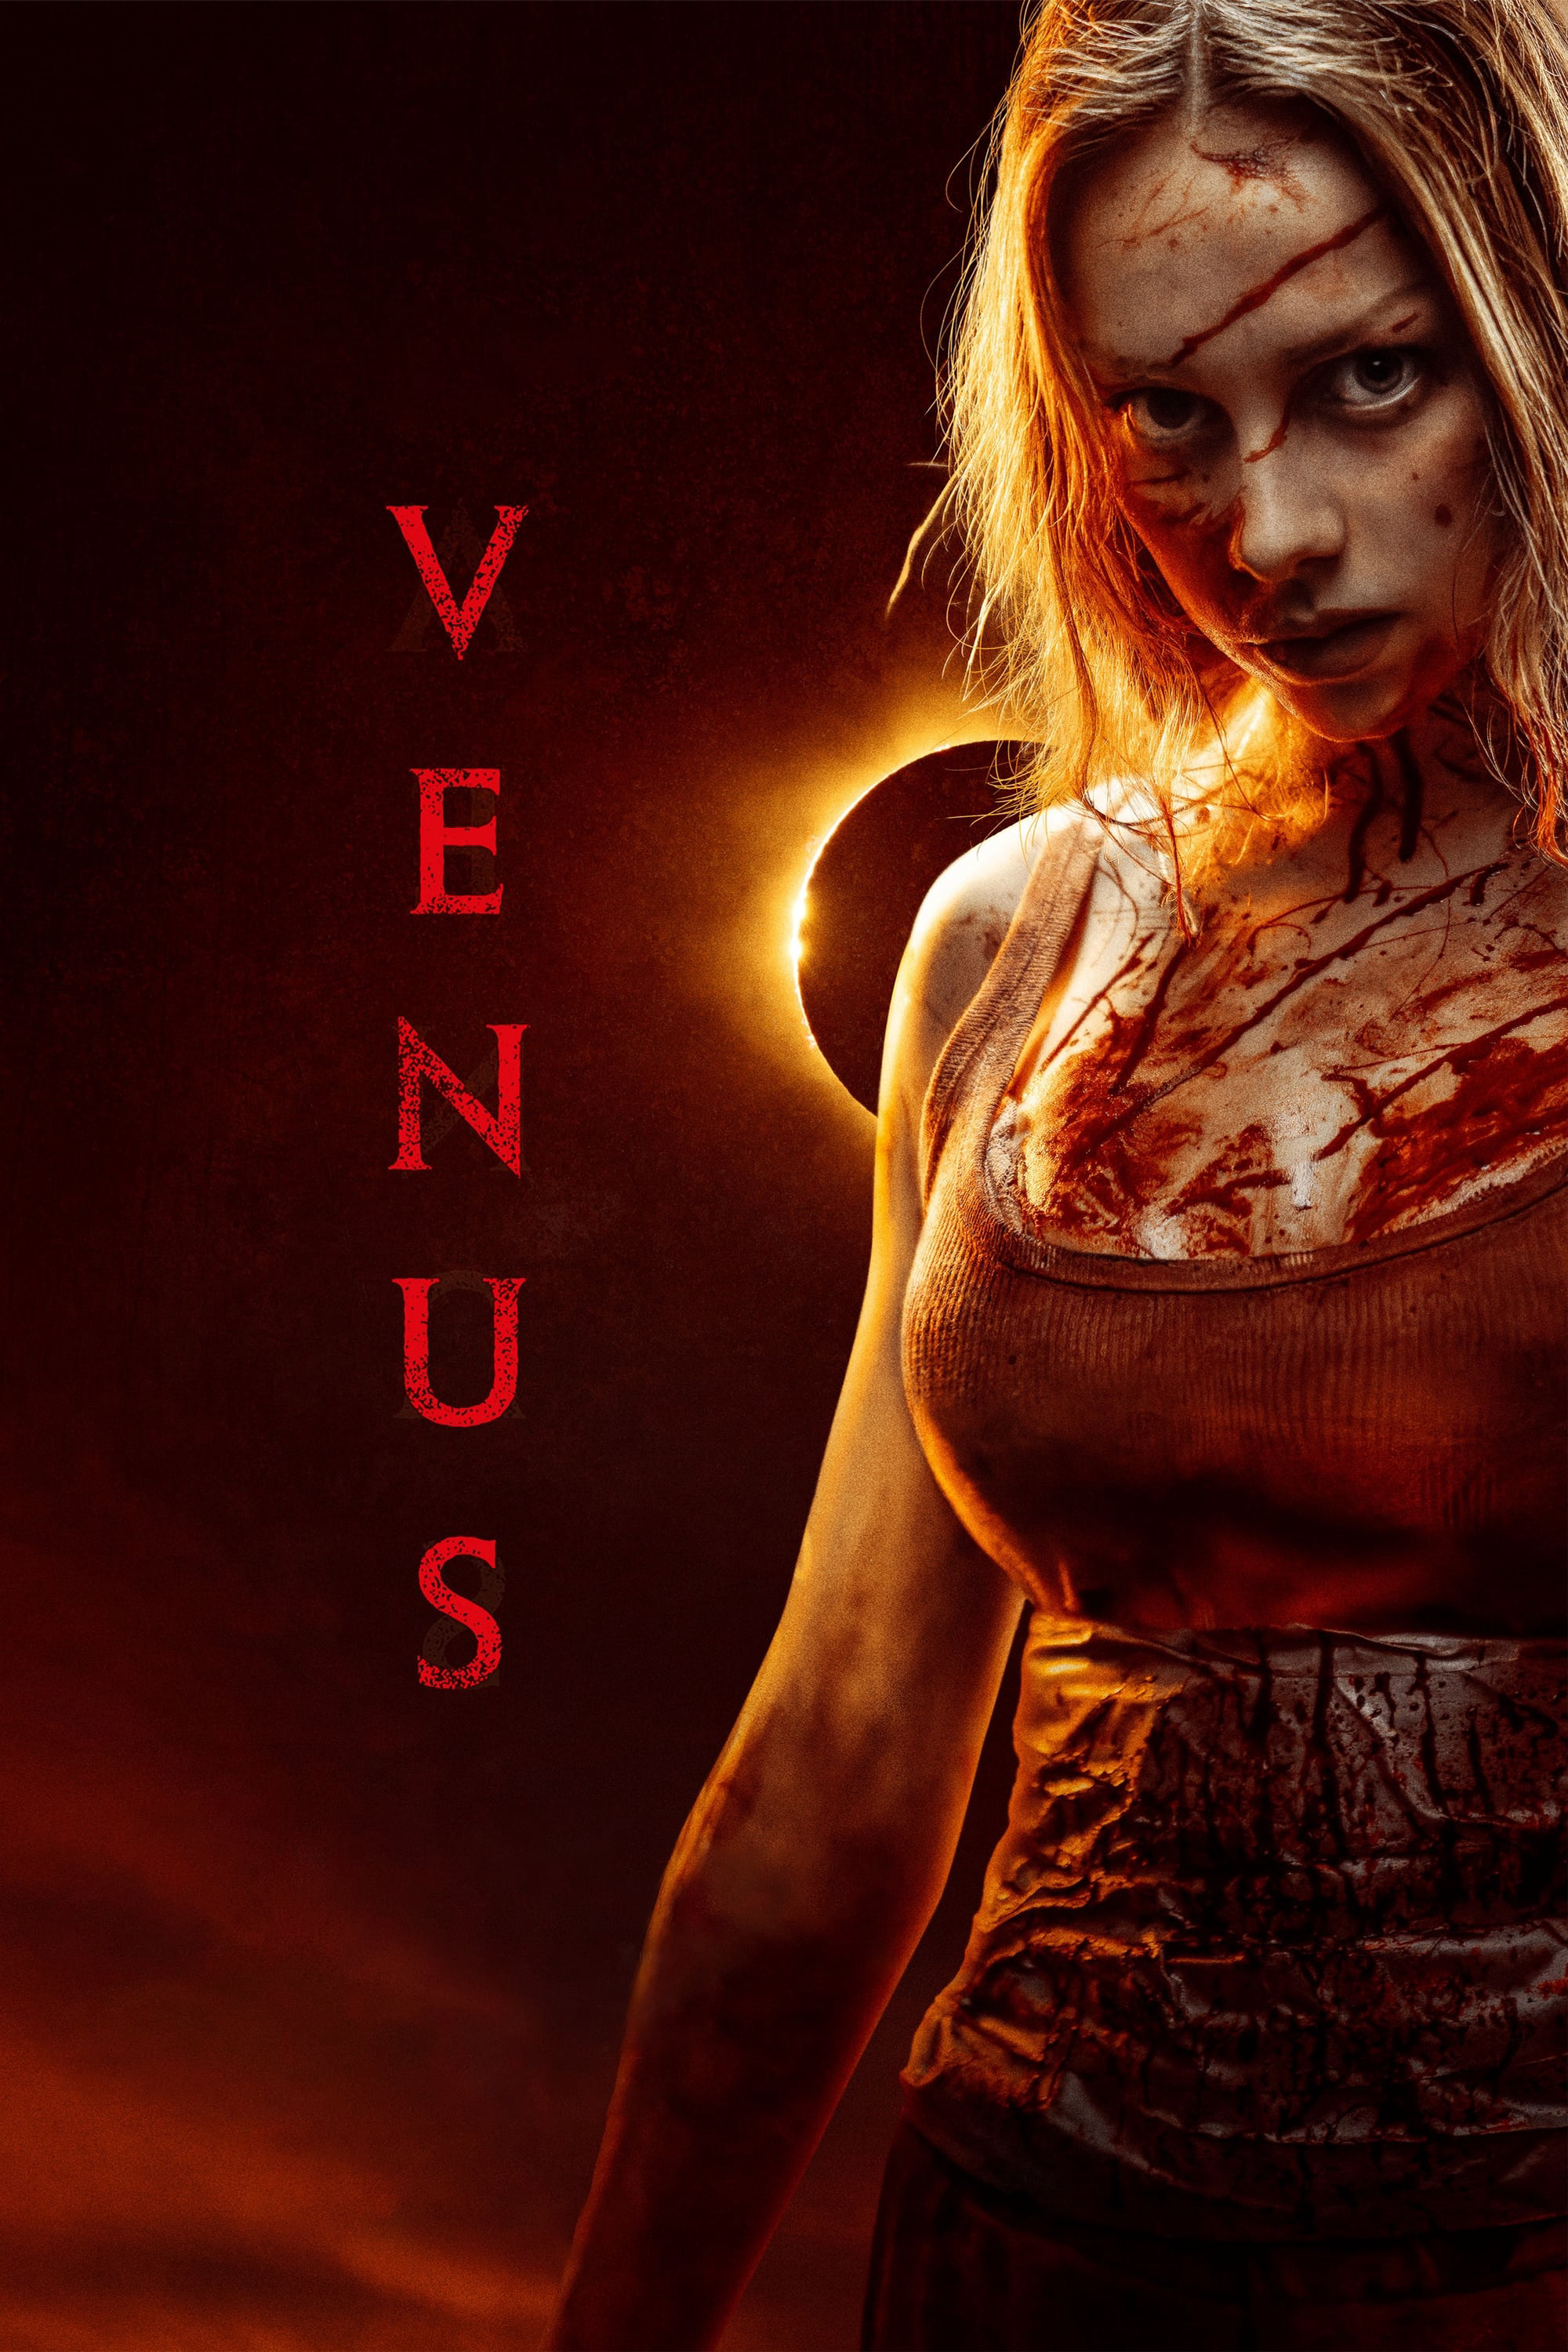 Poster Phim Vệ Nữ (Venus)